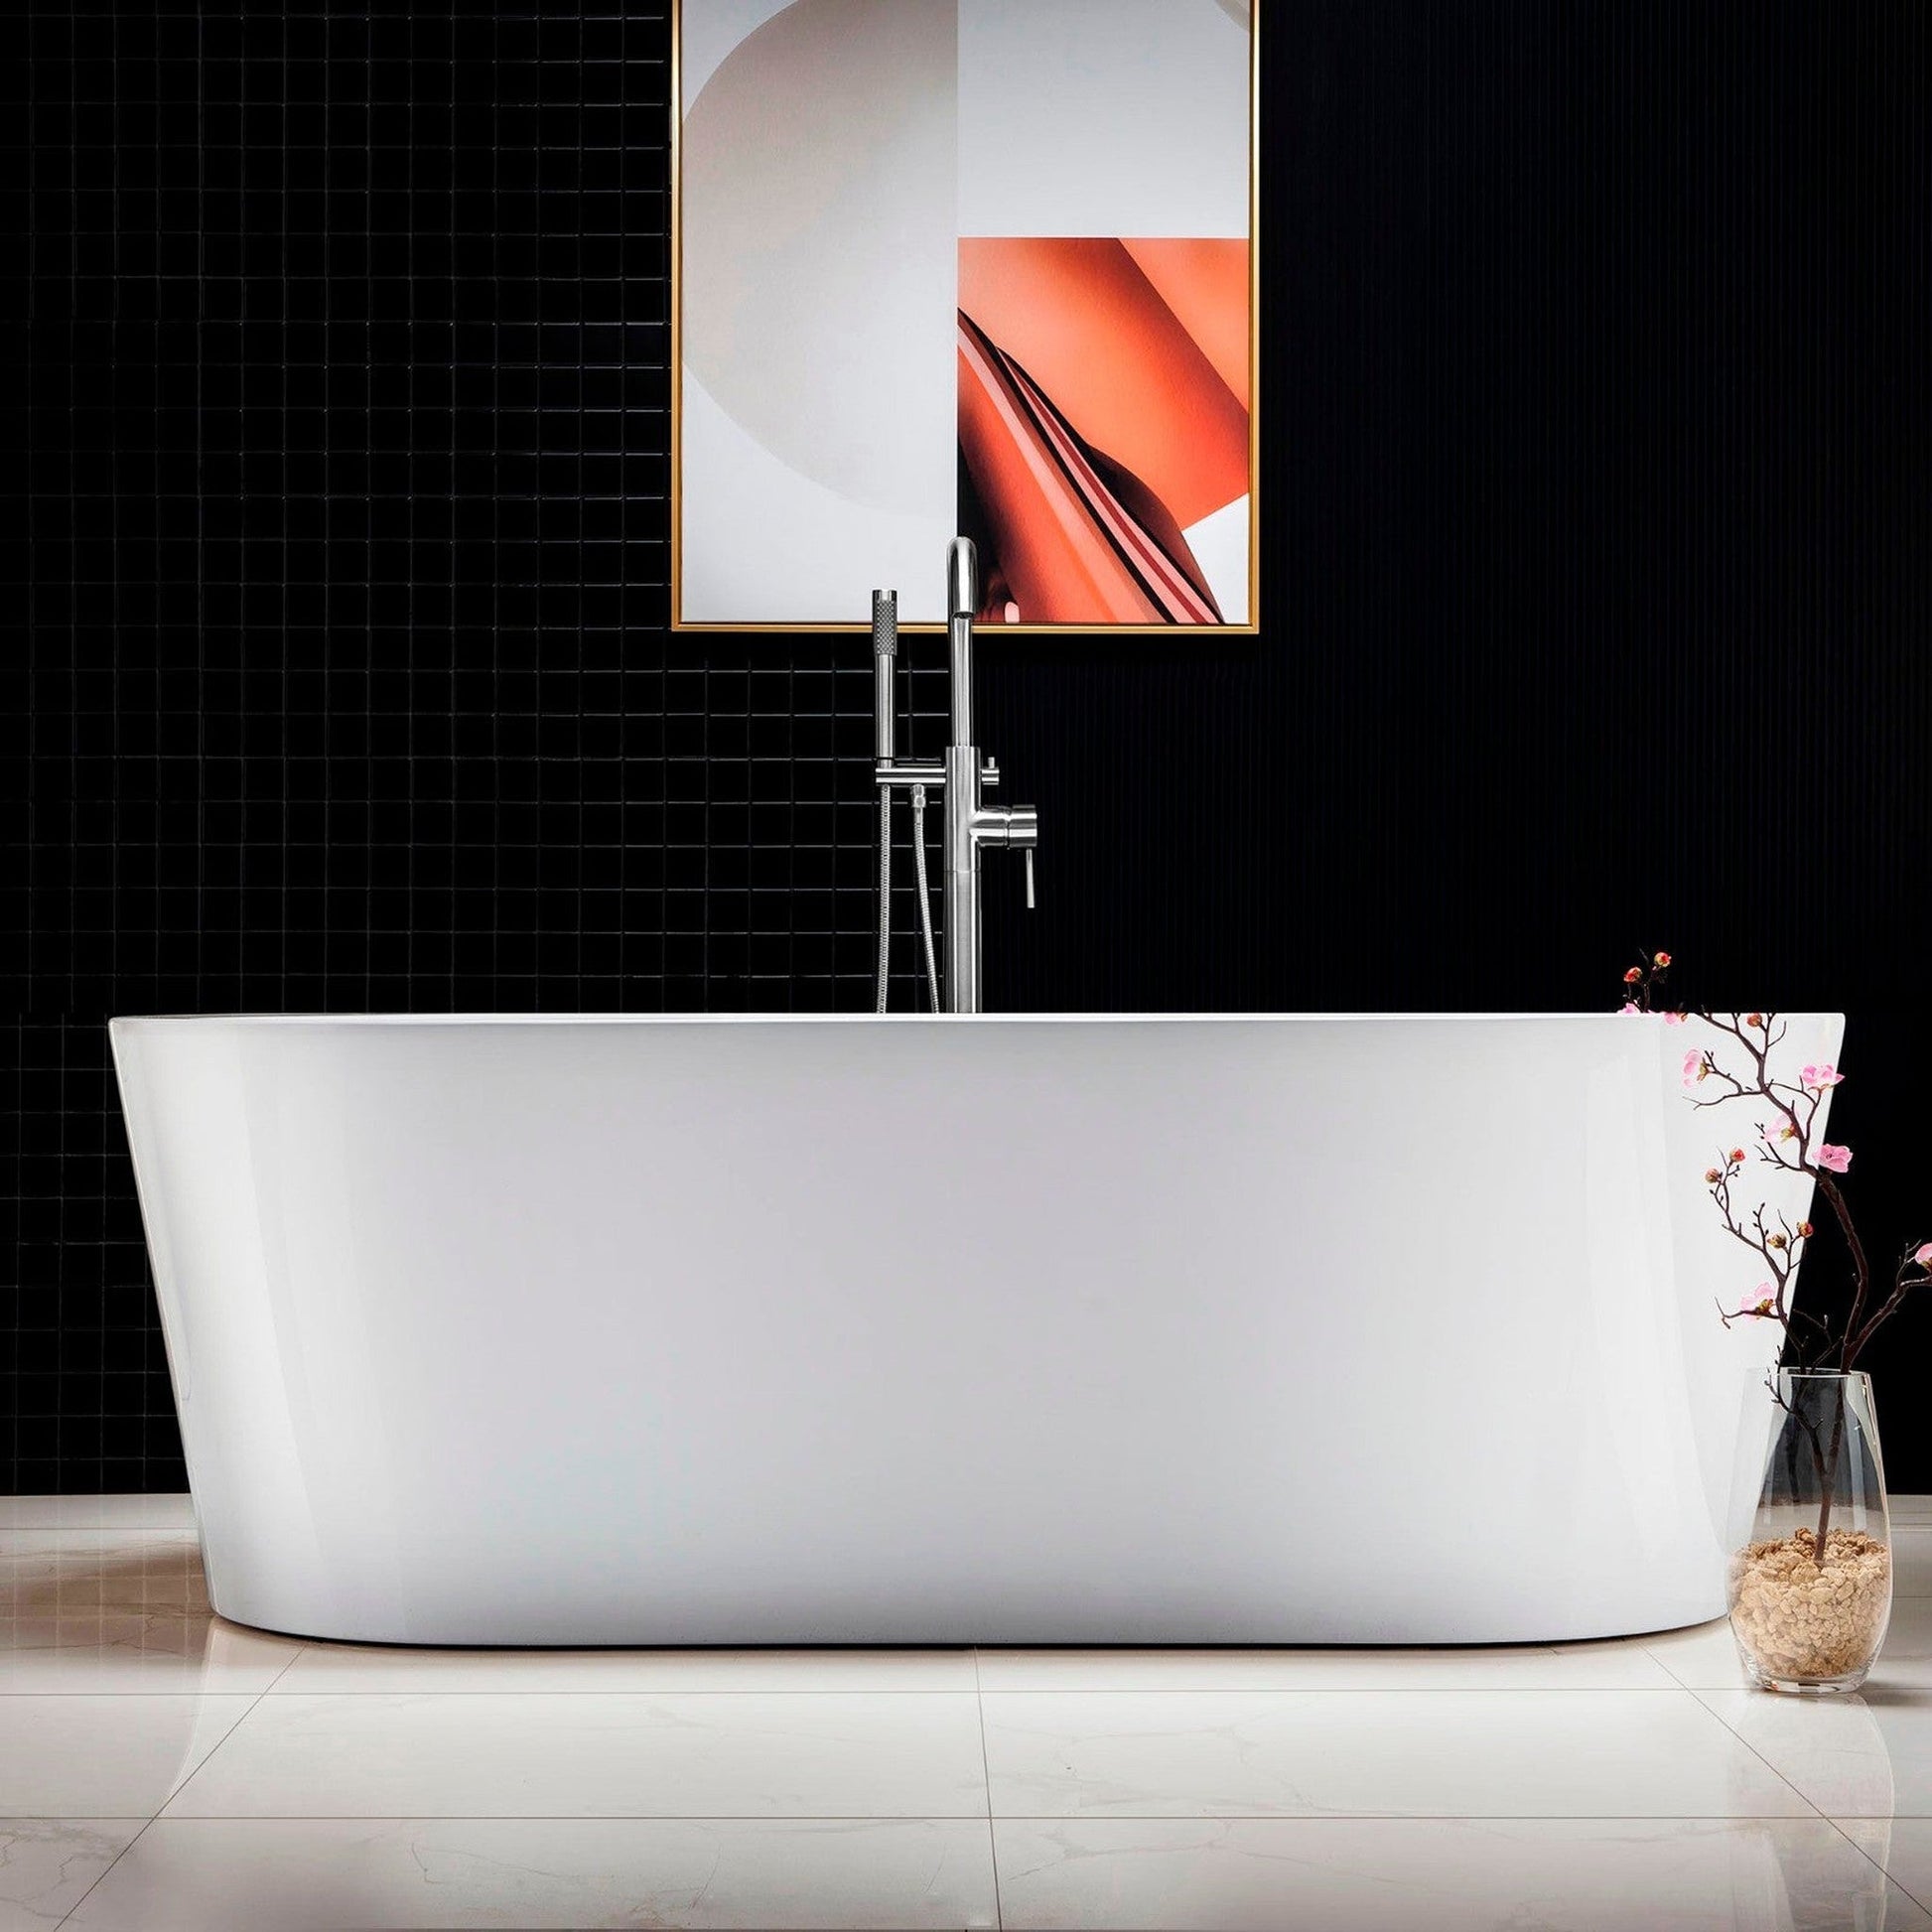 WoodBridge B0002 66" White Acrylic Freestanding Soaking Bathtub With Chrome Drain, Overflow, F0021 Tub Filler and Caddy Tray